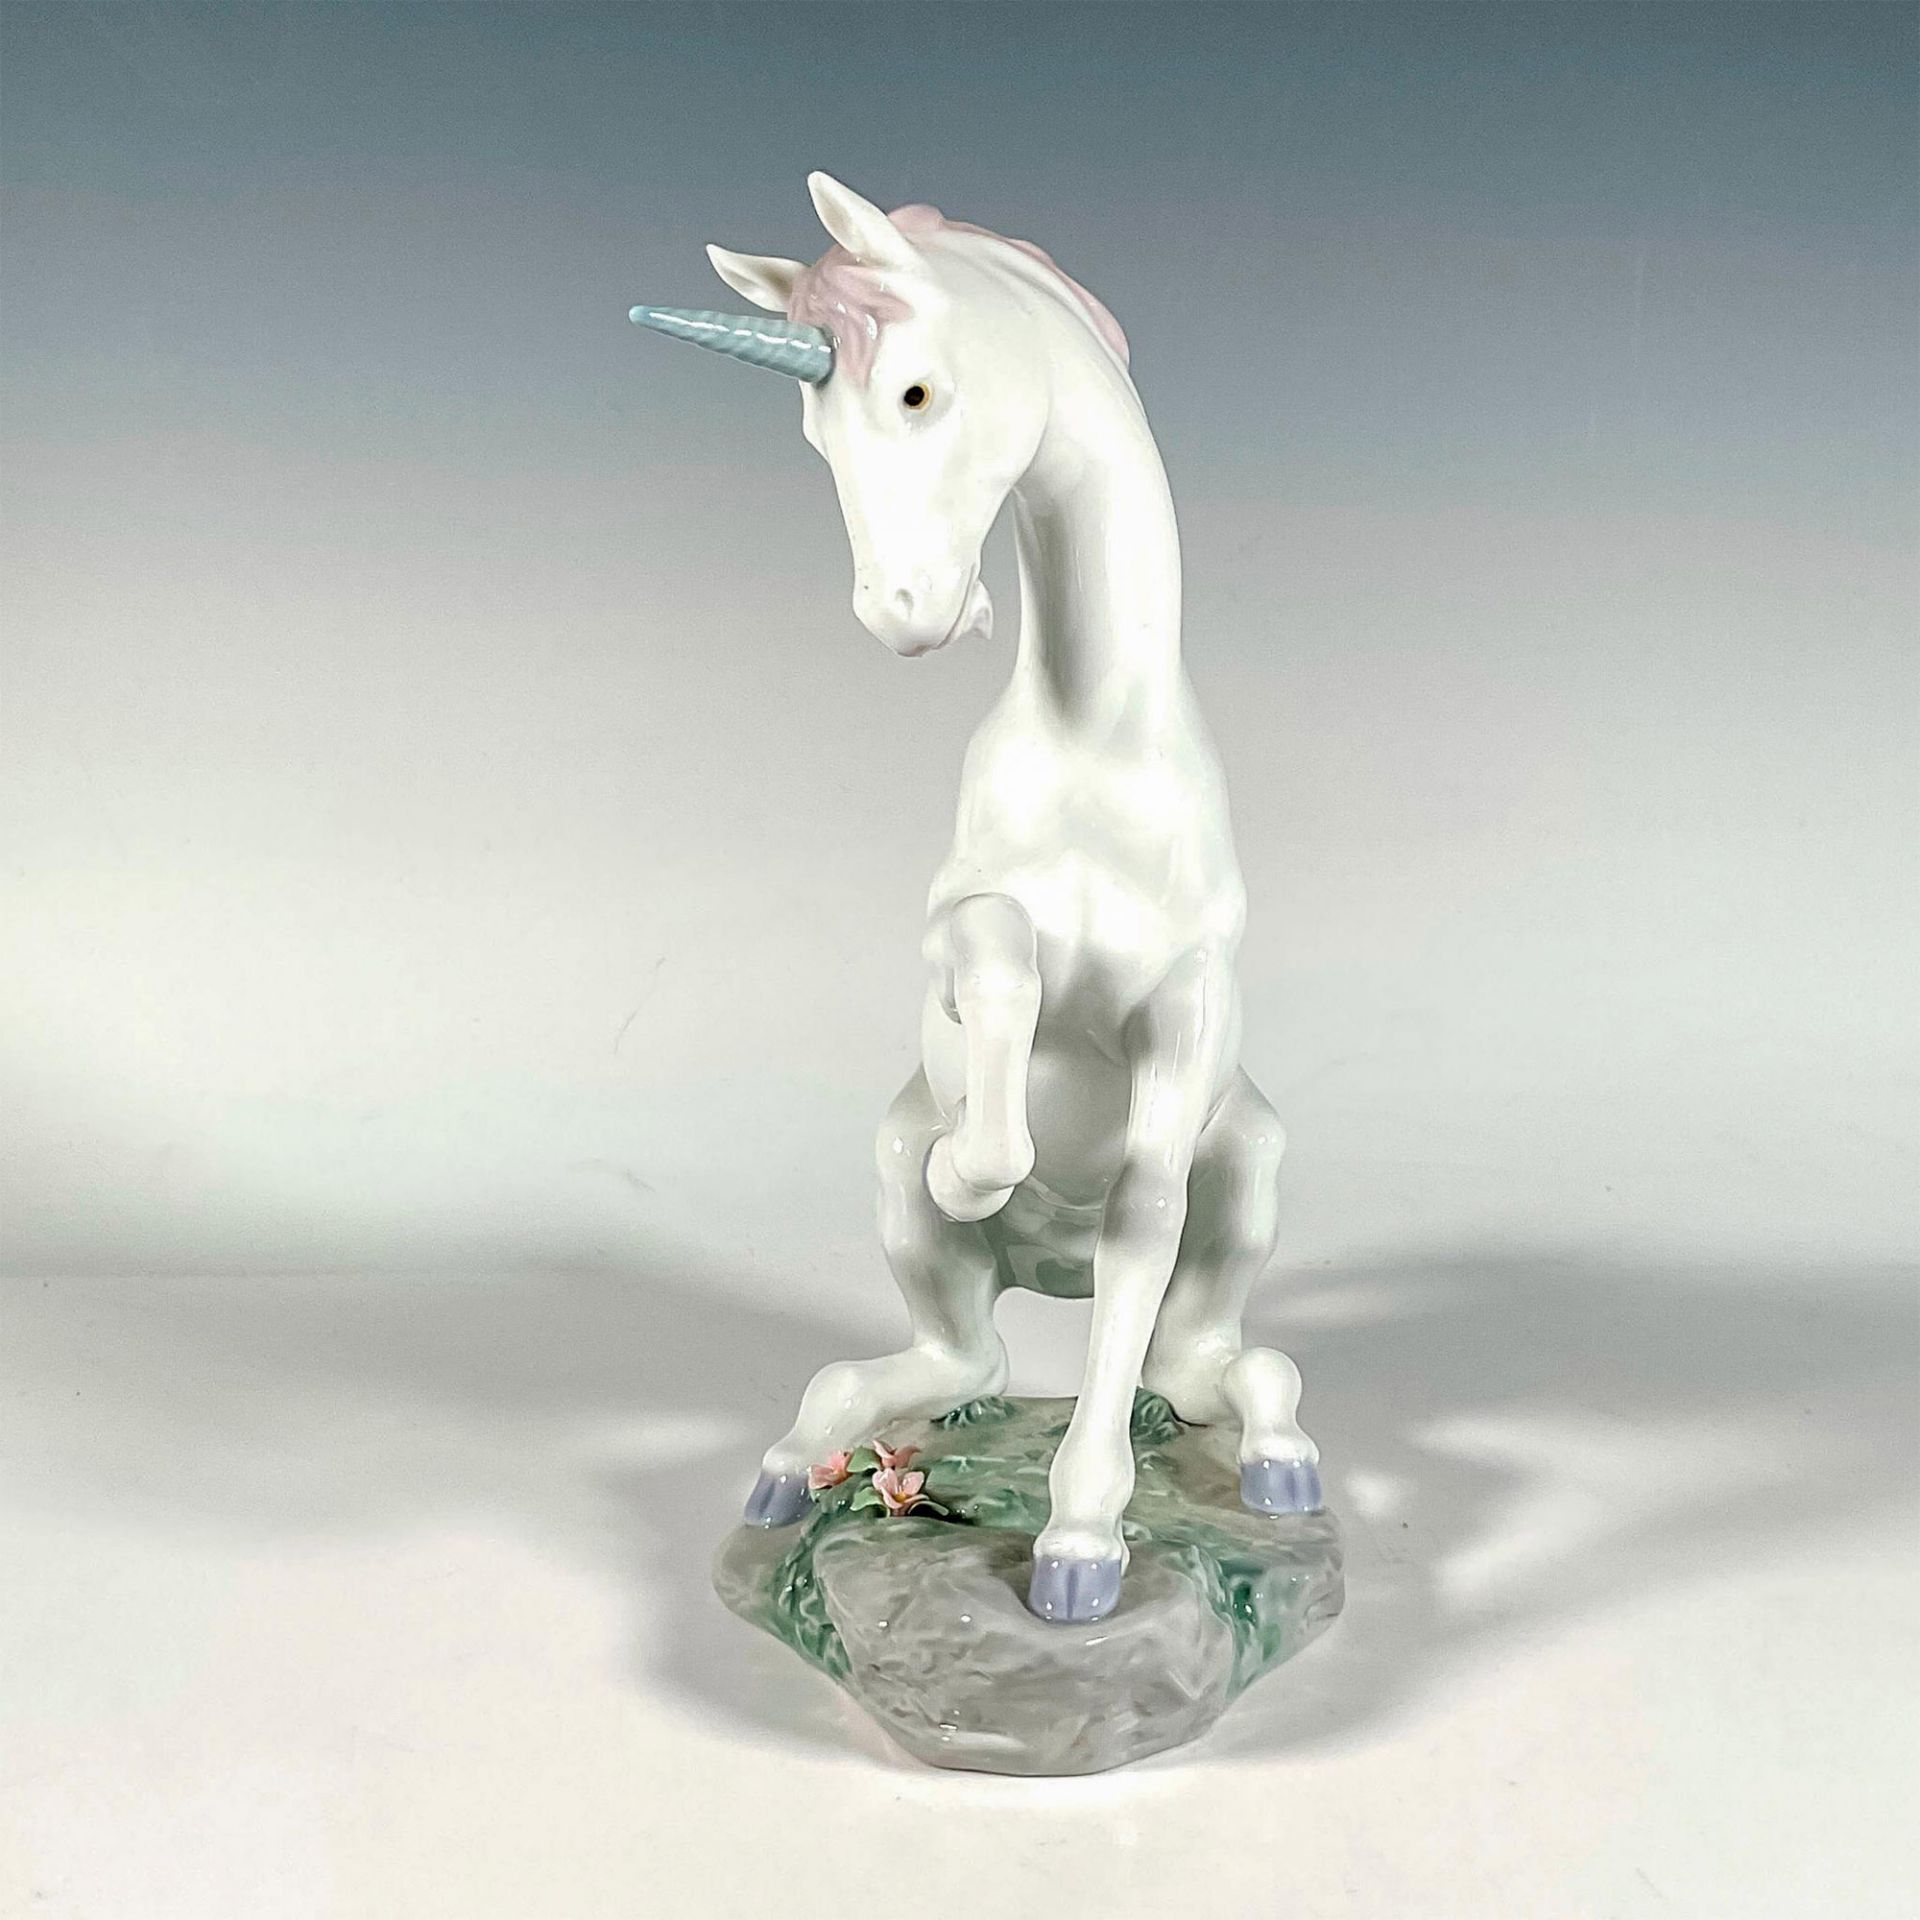 Magical Unicorn 1007697 - Lladro Porcelain Figurine - Image 5 of 6